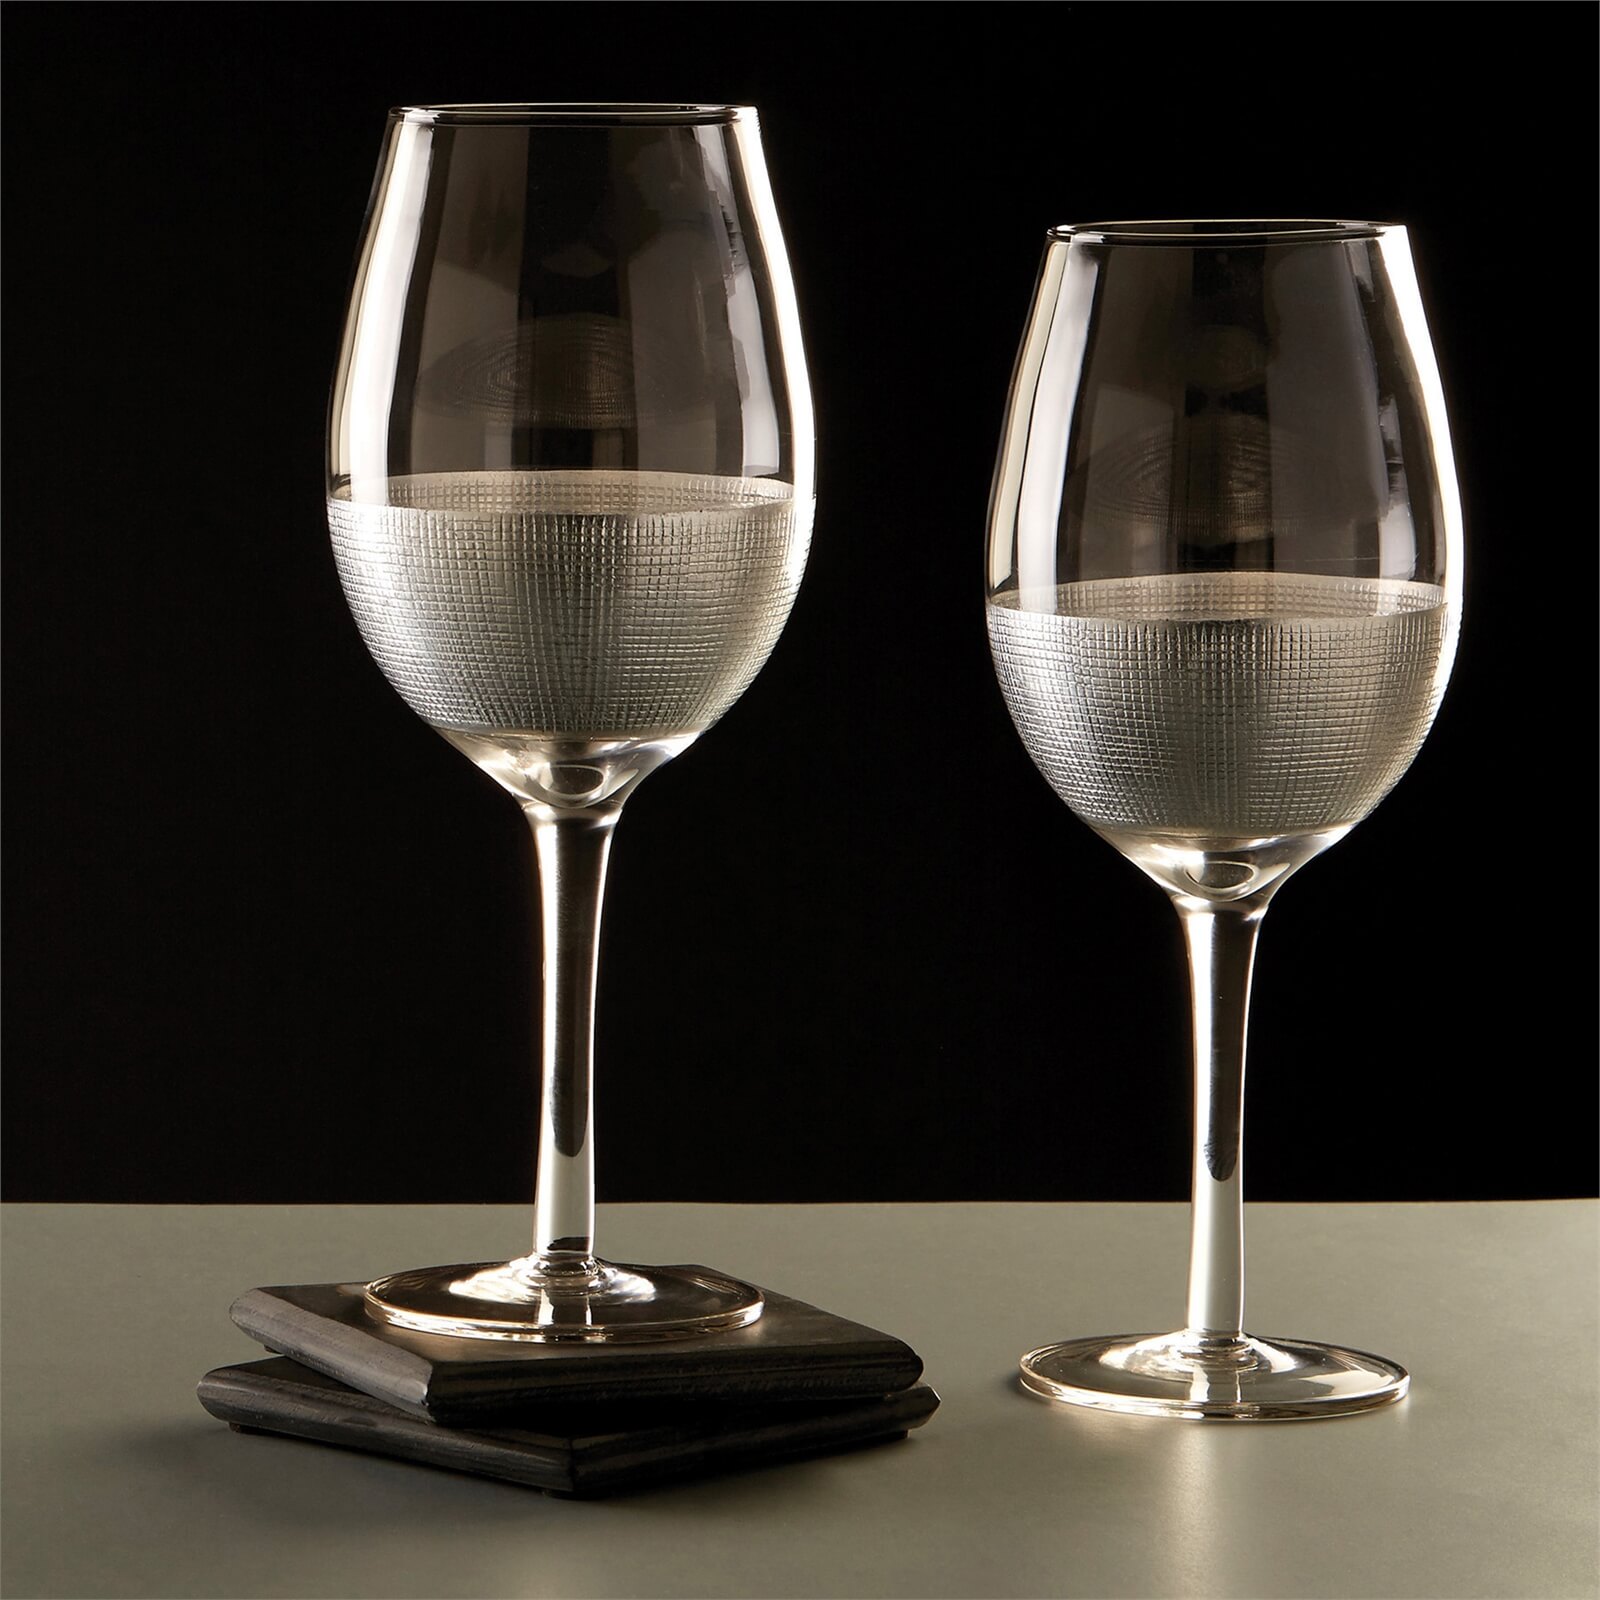 Apollo Large Wine Glasses - Set of 4